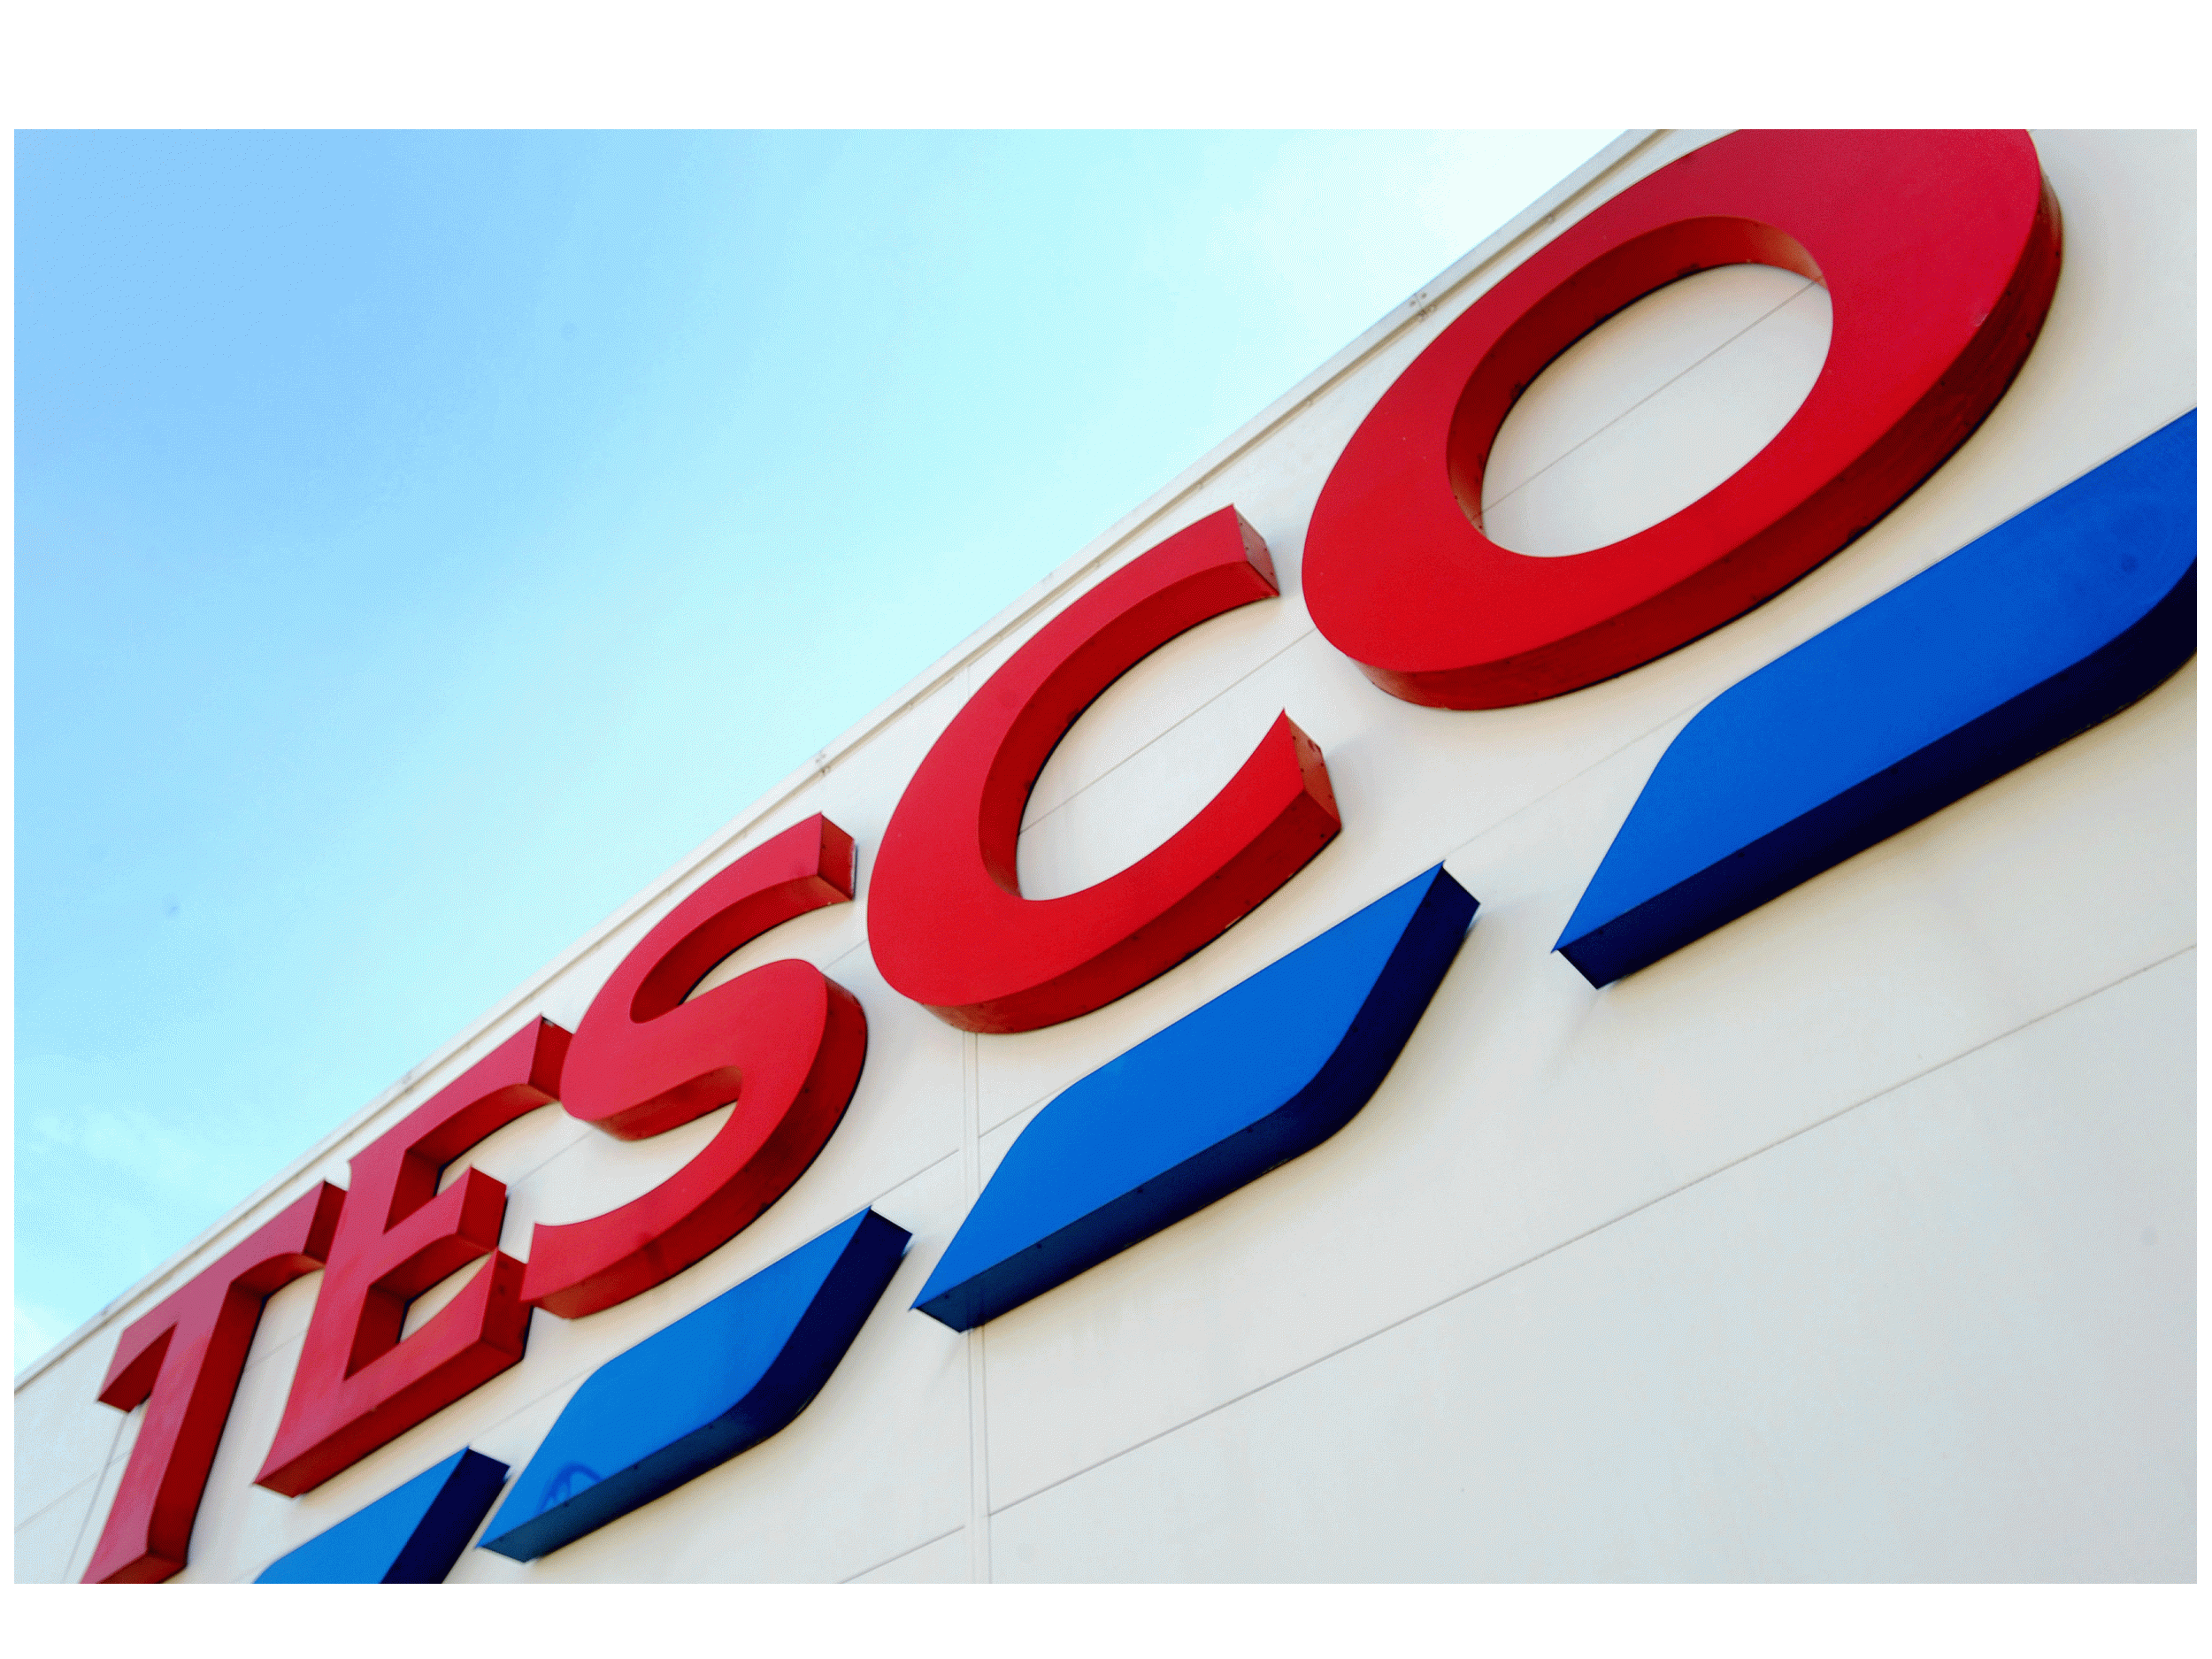 Tesco to cut 1,100 call centre jobs amid ‘unprecedented challenges’